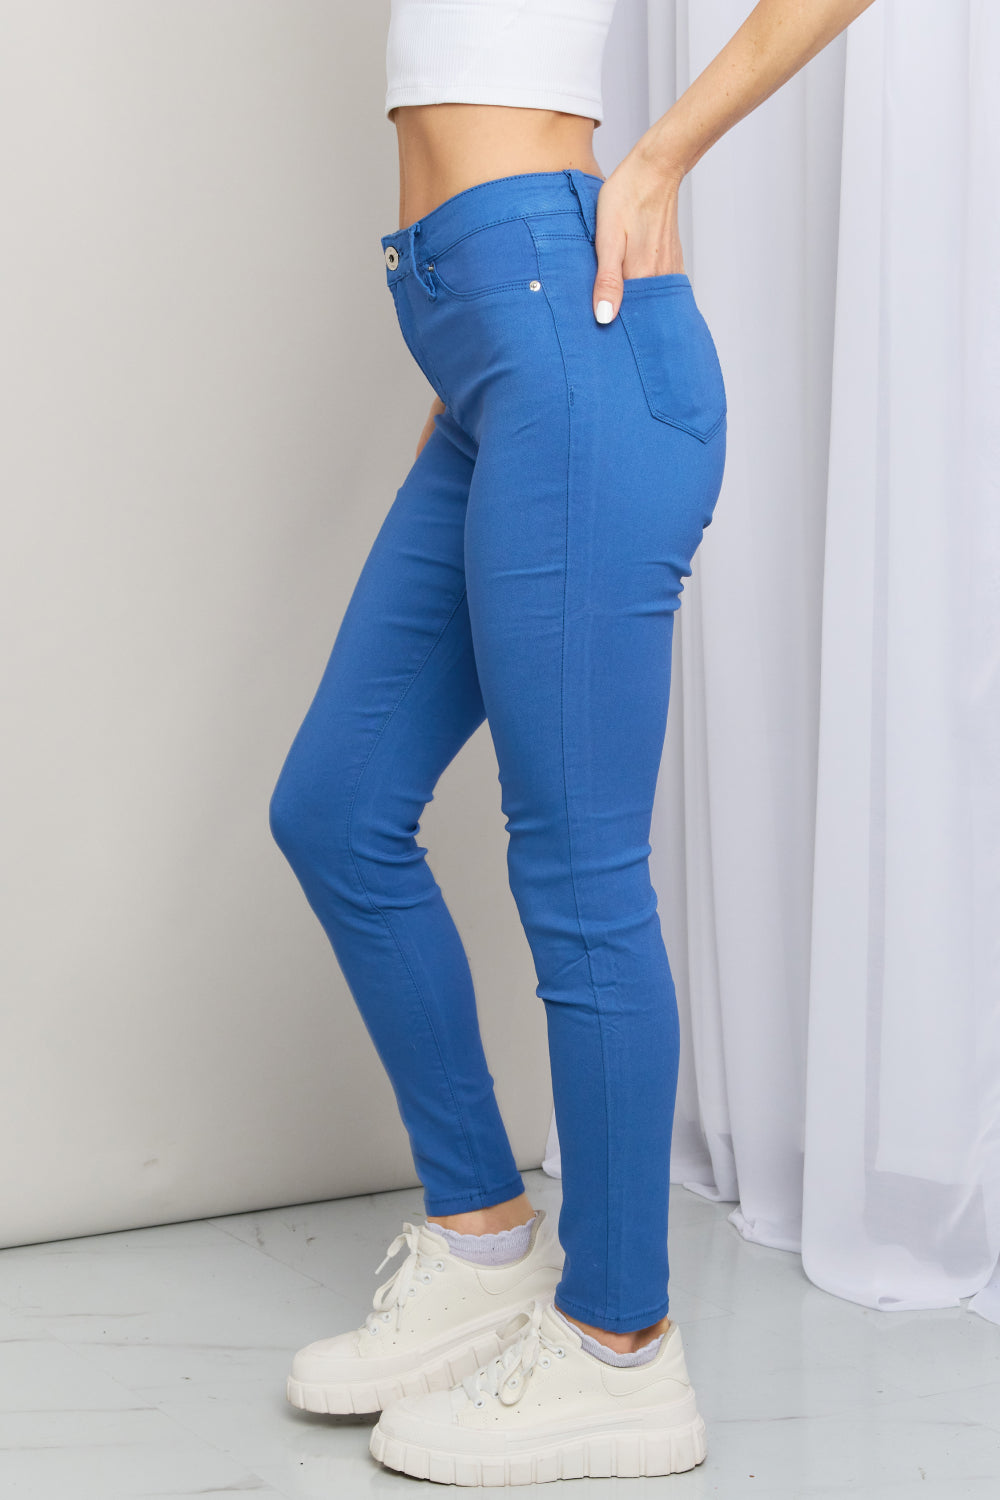 YMI Jeans 3 Infinity Skinny Distressed Thick Stitch Blue Denim Wash Rise  Stretch